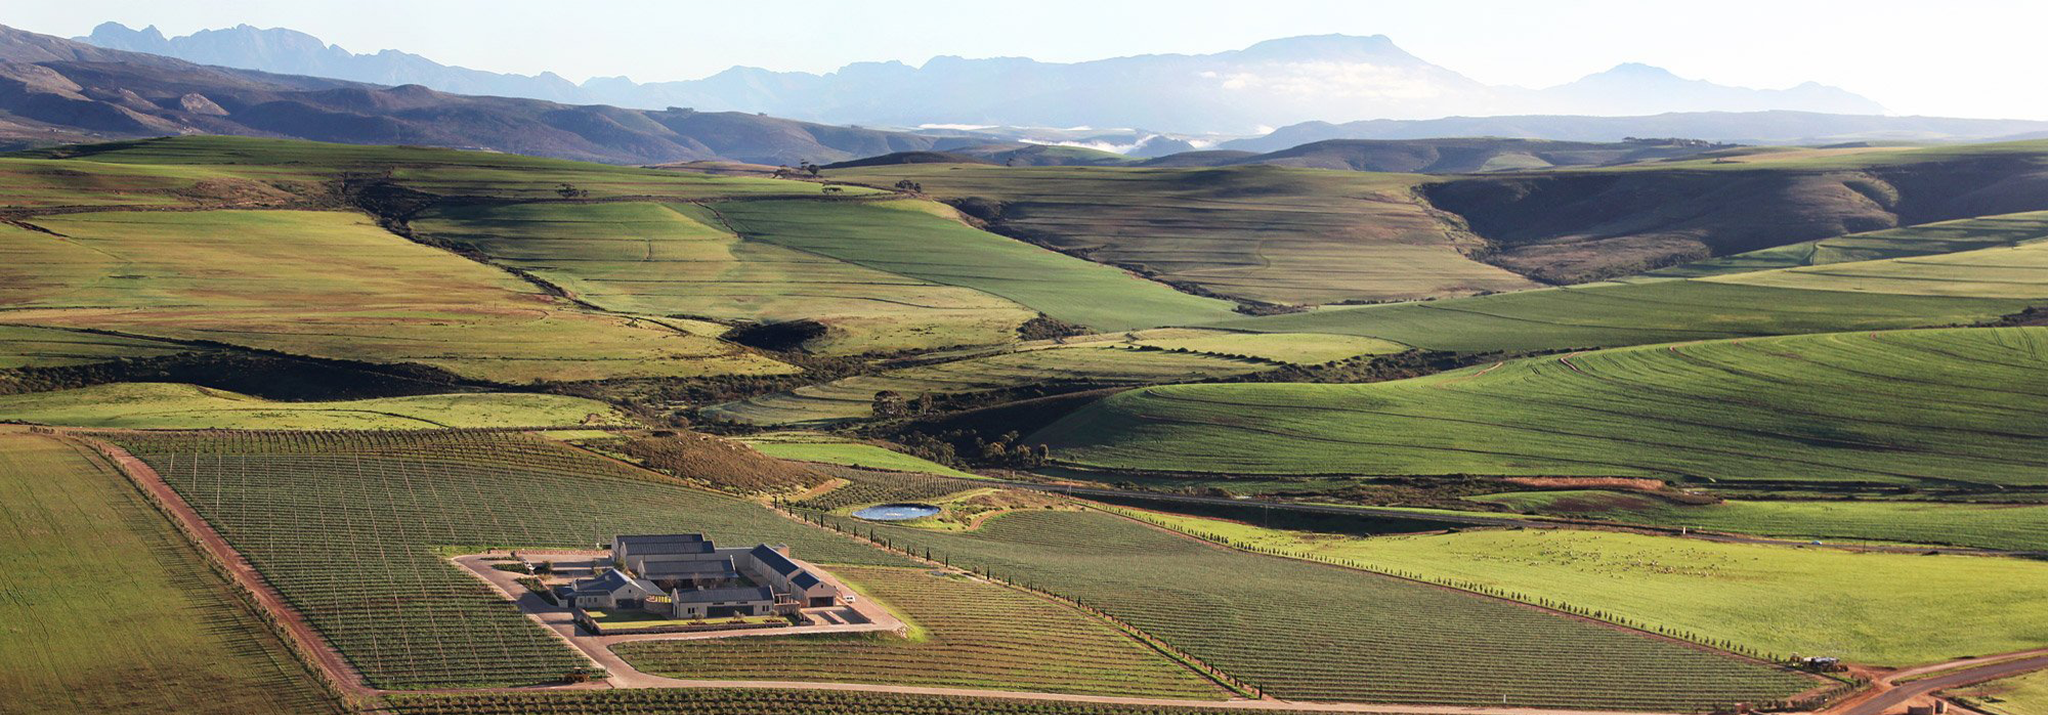 Gabrielskloof-vineyard-south-africa-winery-wines-botriver-peter-allyson